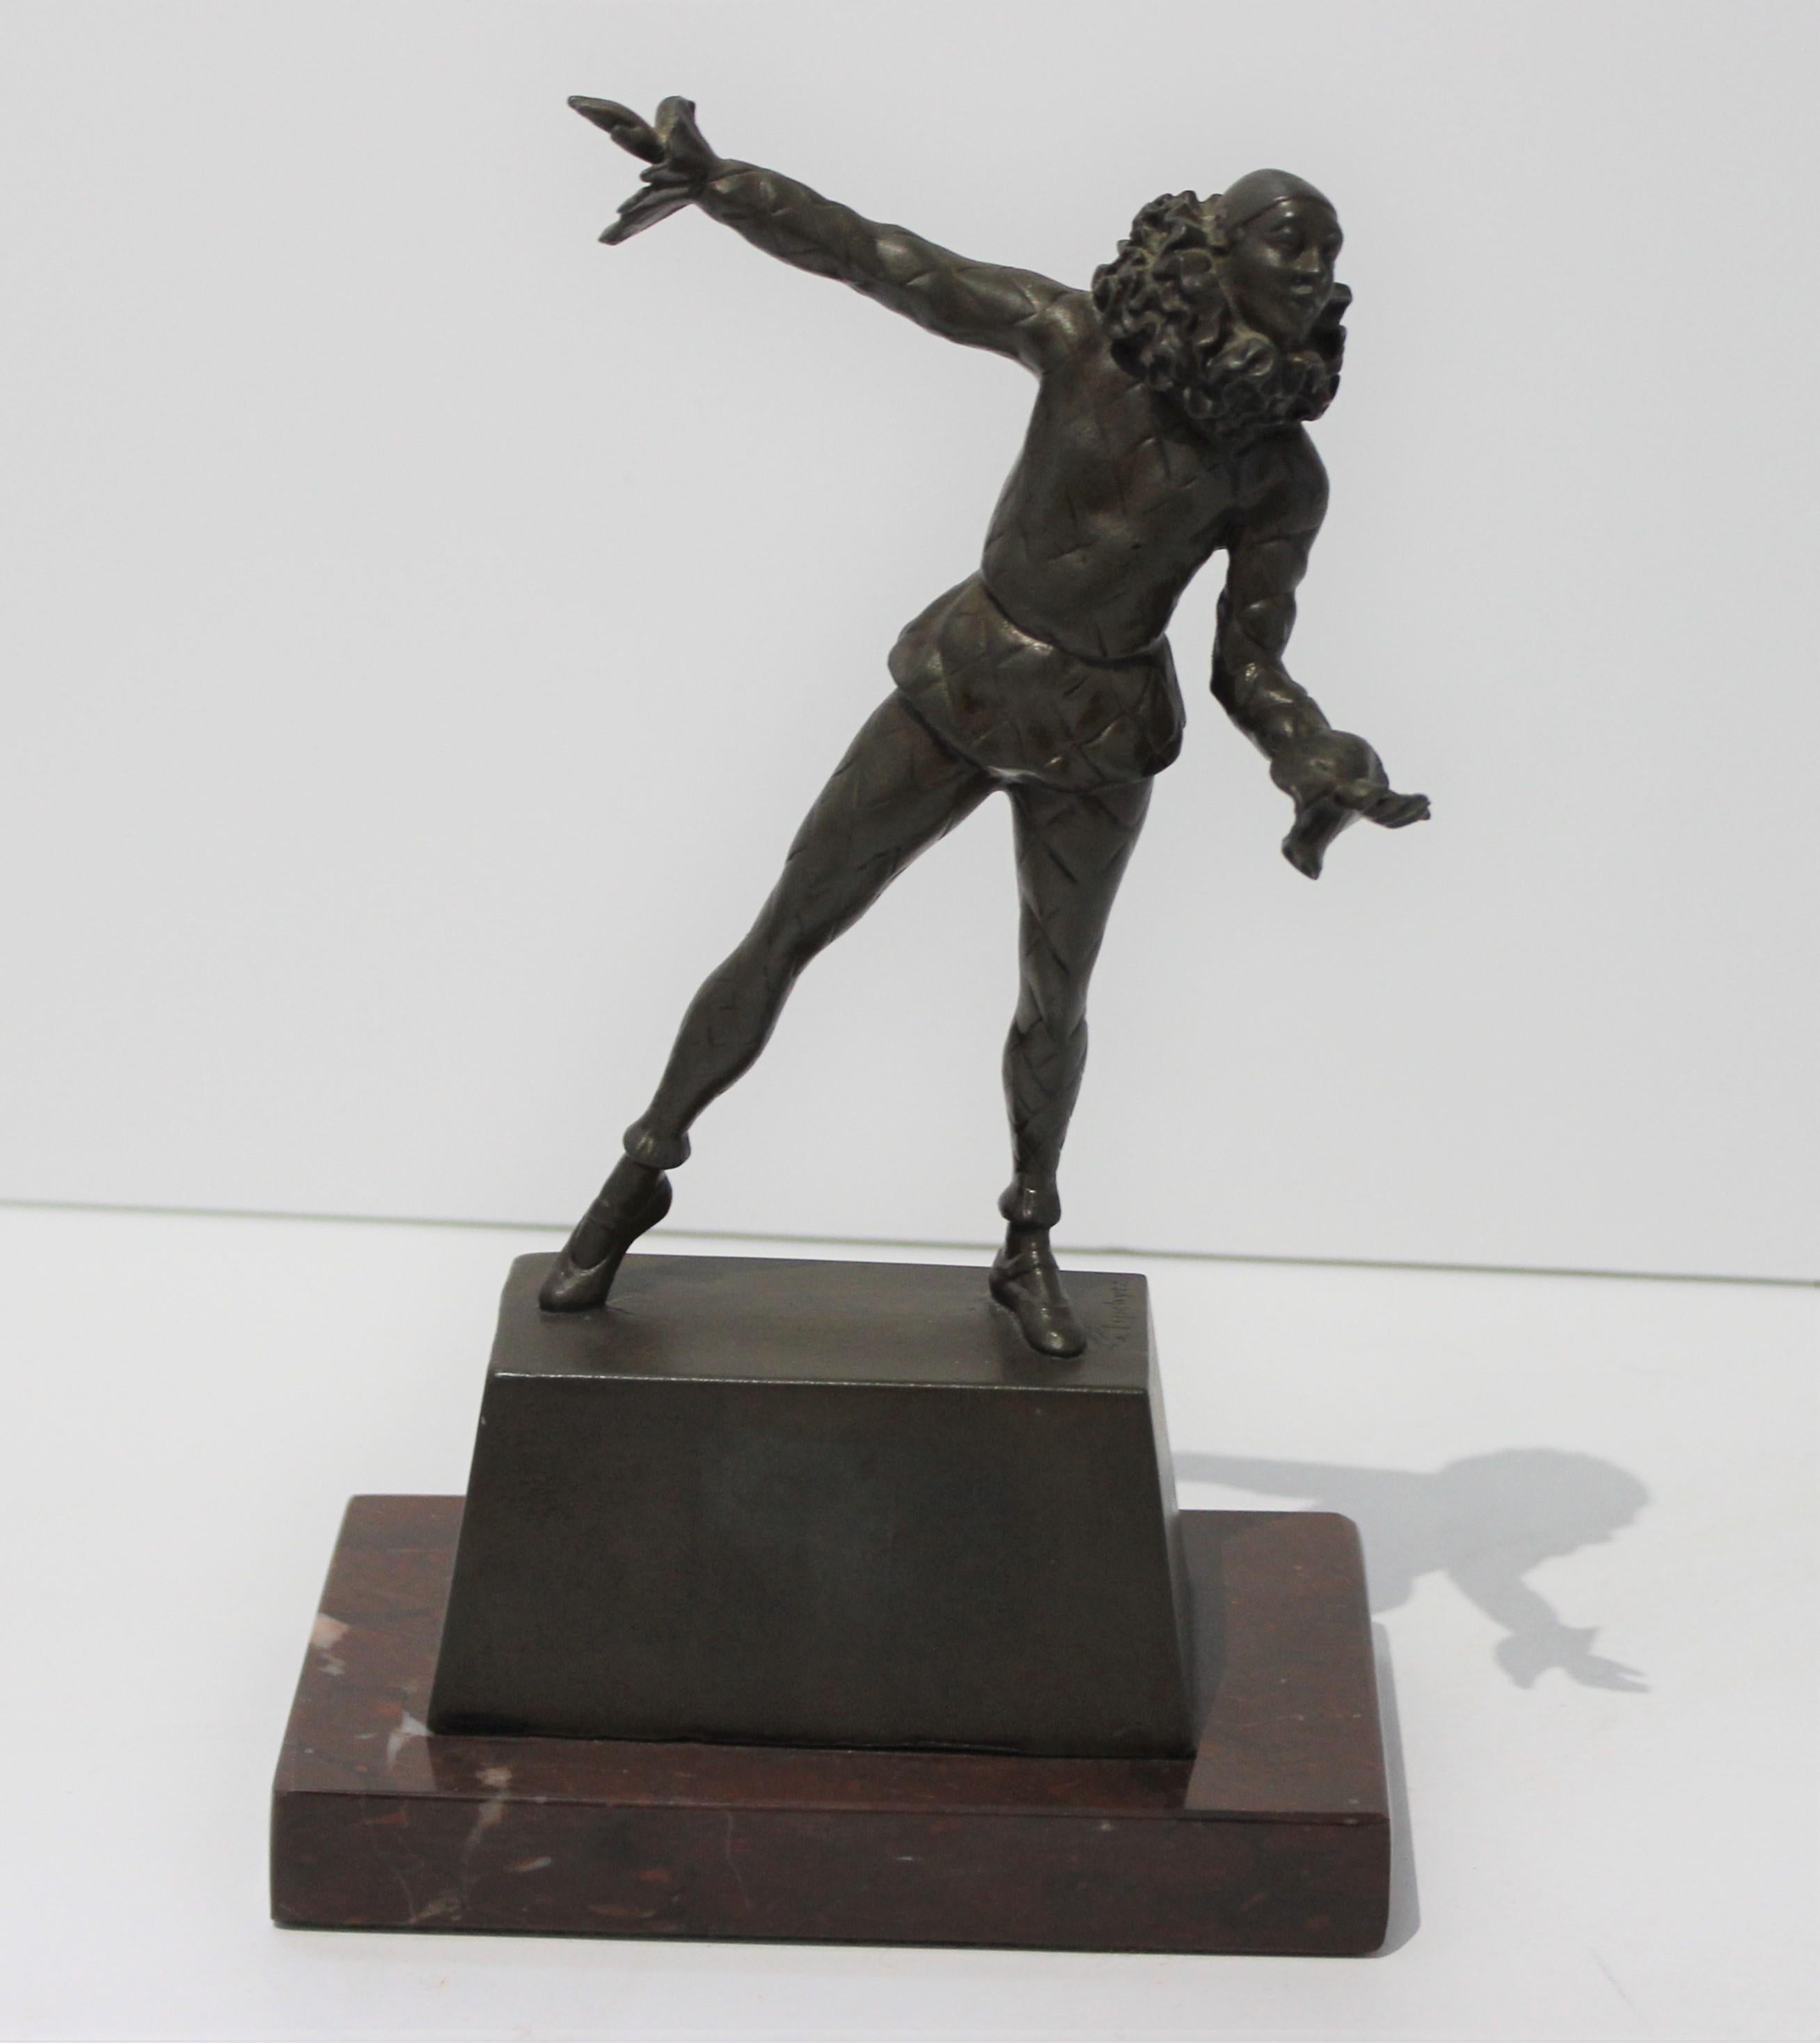 Bronze sculpture of a Harlequin on a rouge marble base - by Samuel Lipchytz (1880-1943) France.

About the Artist:
Samuel LIPSCHITZ (born Salomon Lipszyc)
PABIANITZ (POLAND) 1880 – DEPORTED TO AUSCHWITZ 1943
Samuel Lipschitz received a